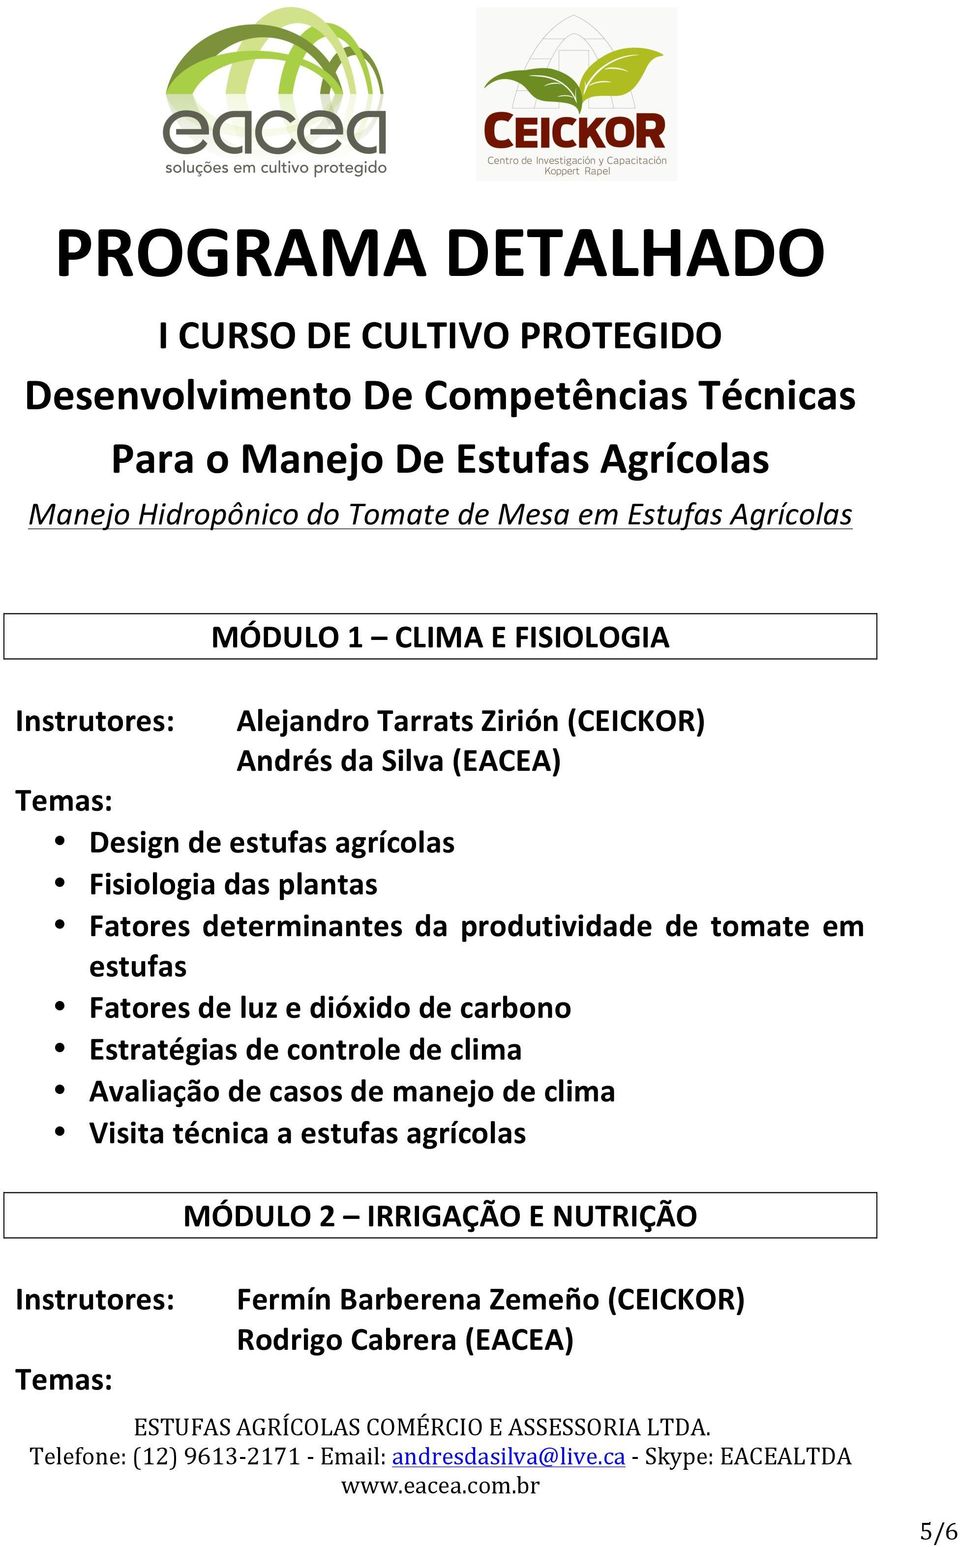 Instrutores: Alejandro Tarrats Zirión (CEICKOR) Andrés da Silva (EACEA) Temas: Design de estufas agrícolas Fisiologia das plantas Fatores determinantes da produtividade de tomate em estufas Fatores